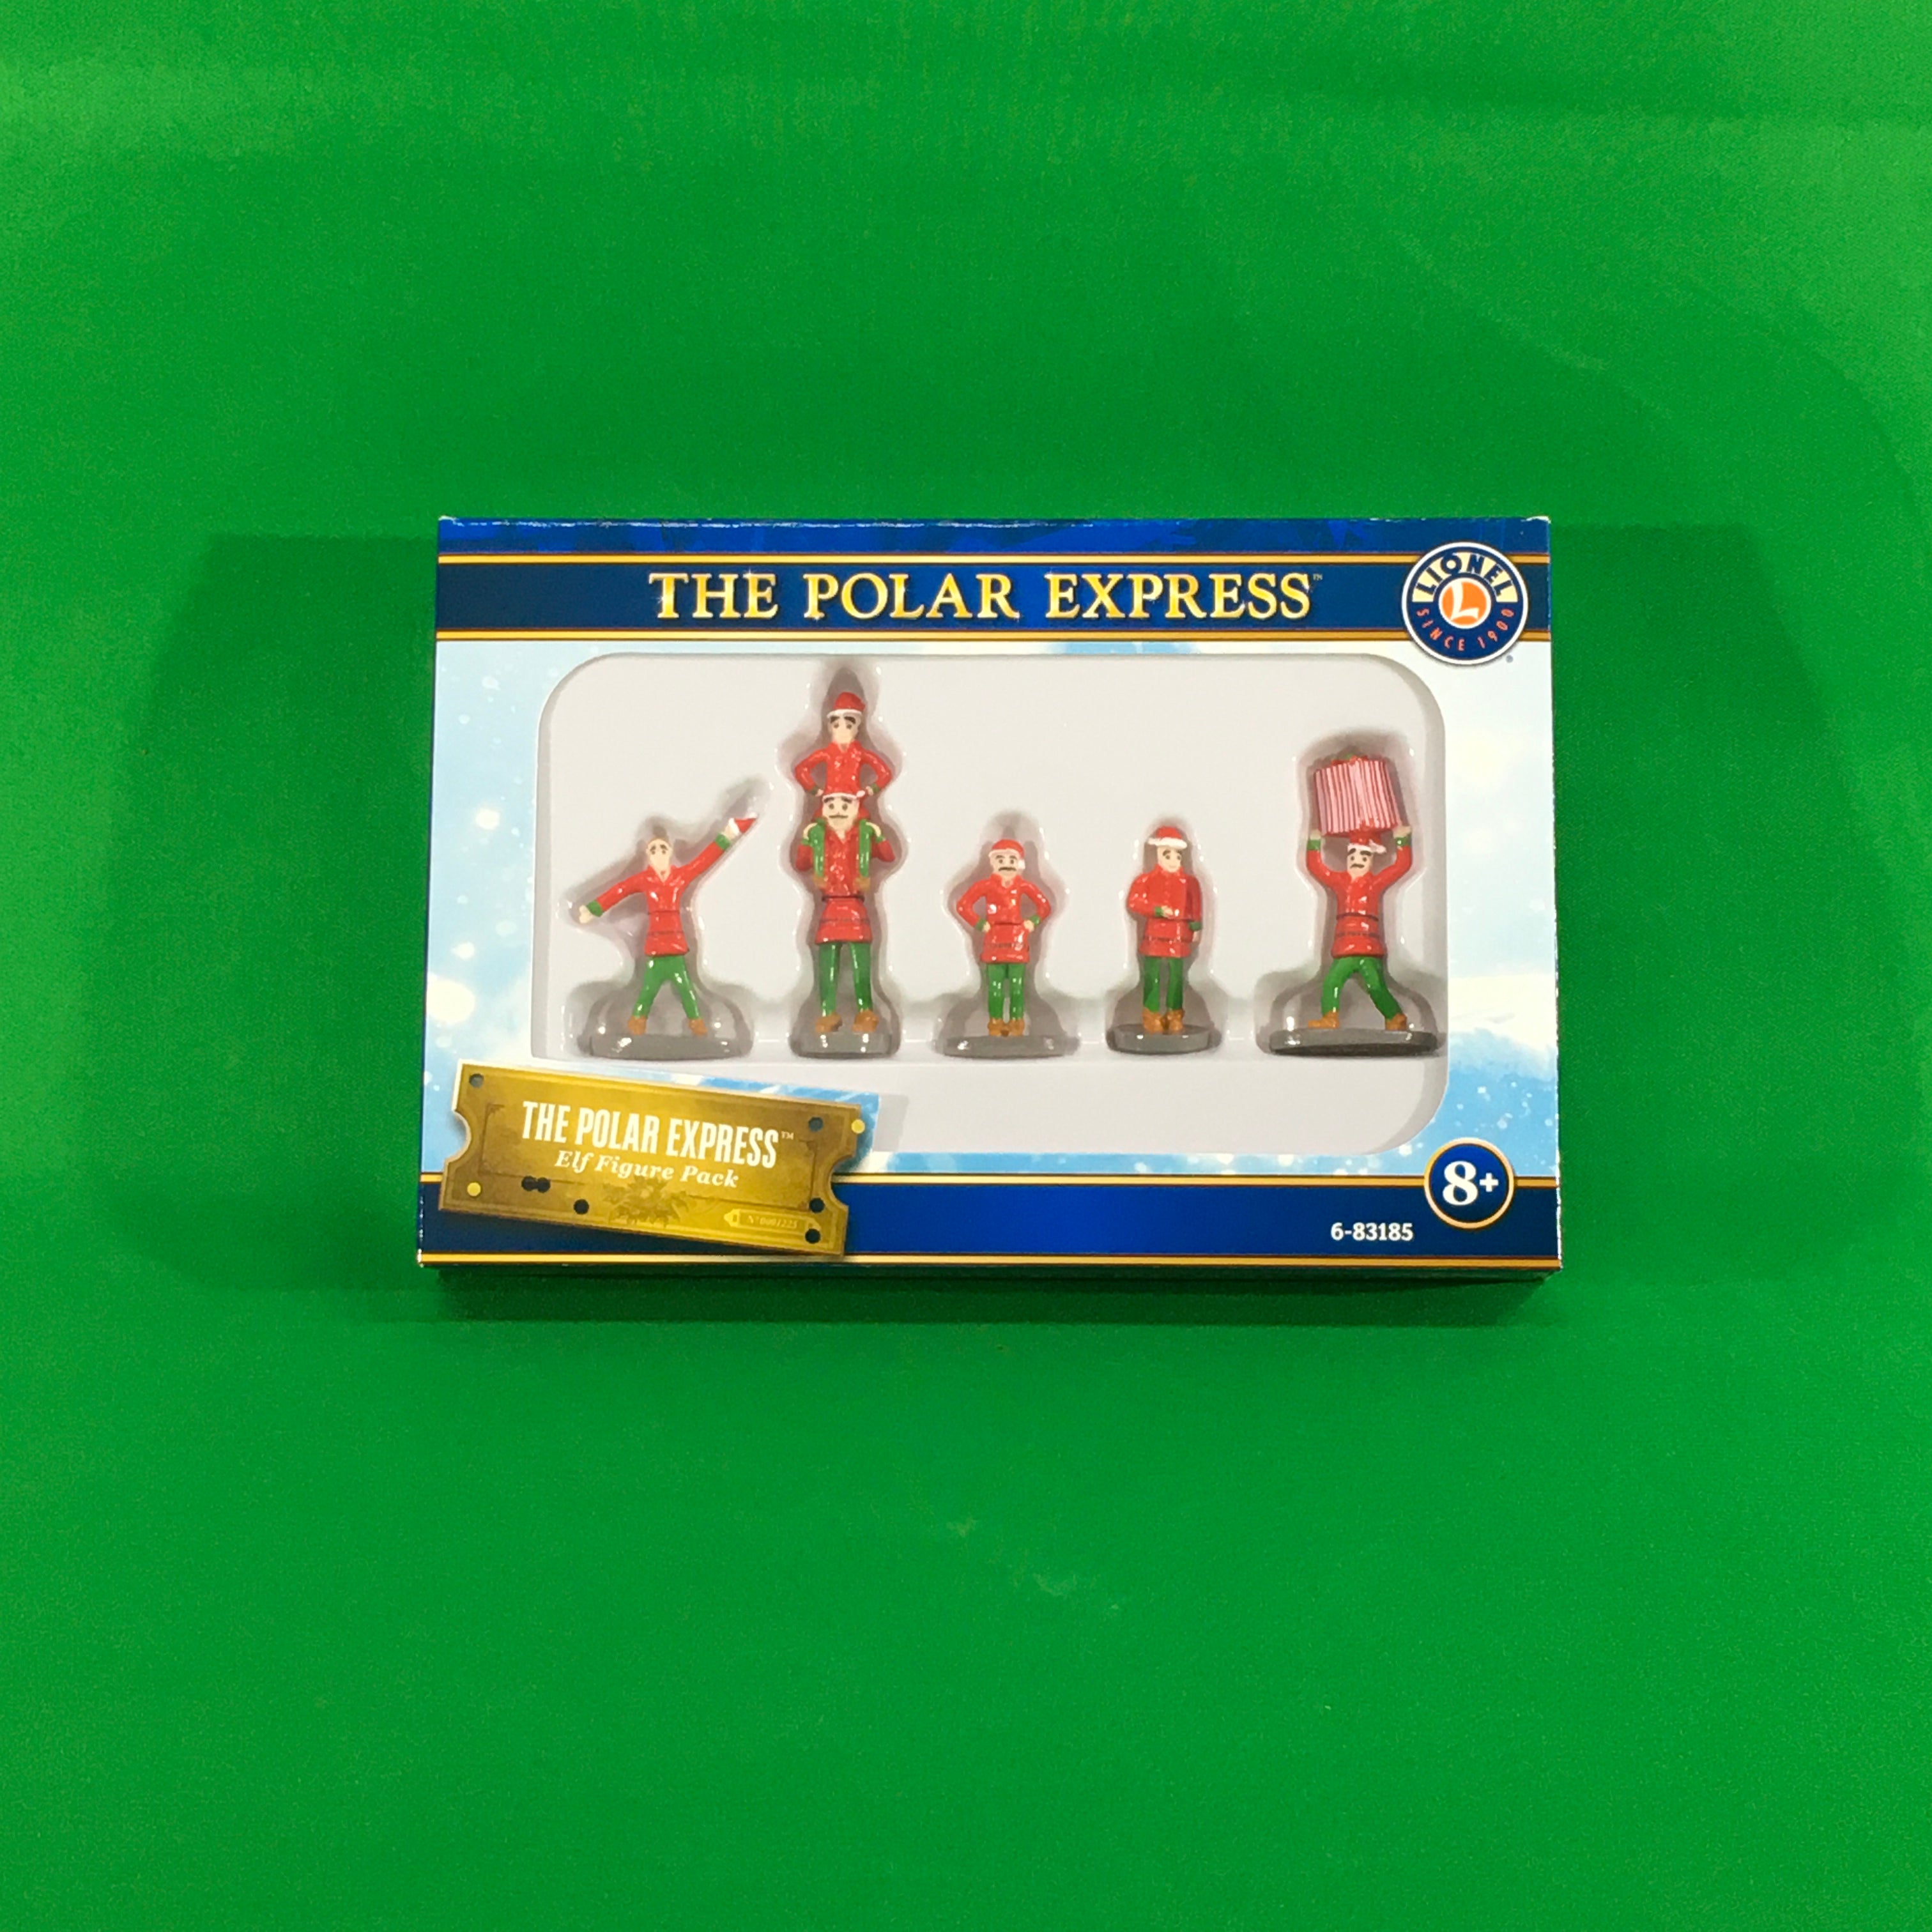 Lionel 6-83185 - The Polar Express Elves Figure Pack (5-Pack)